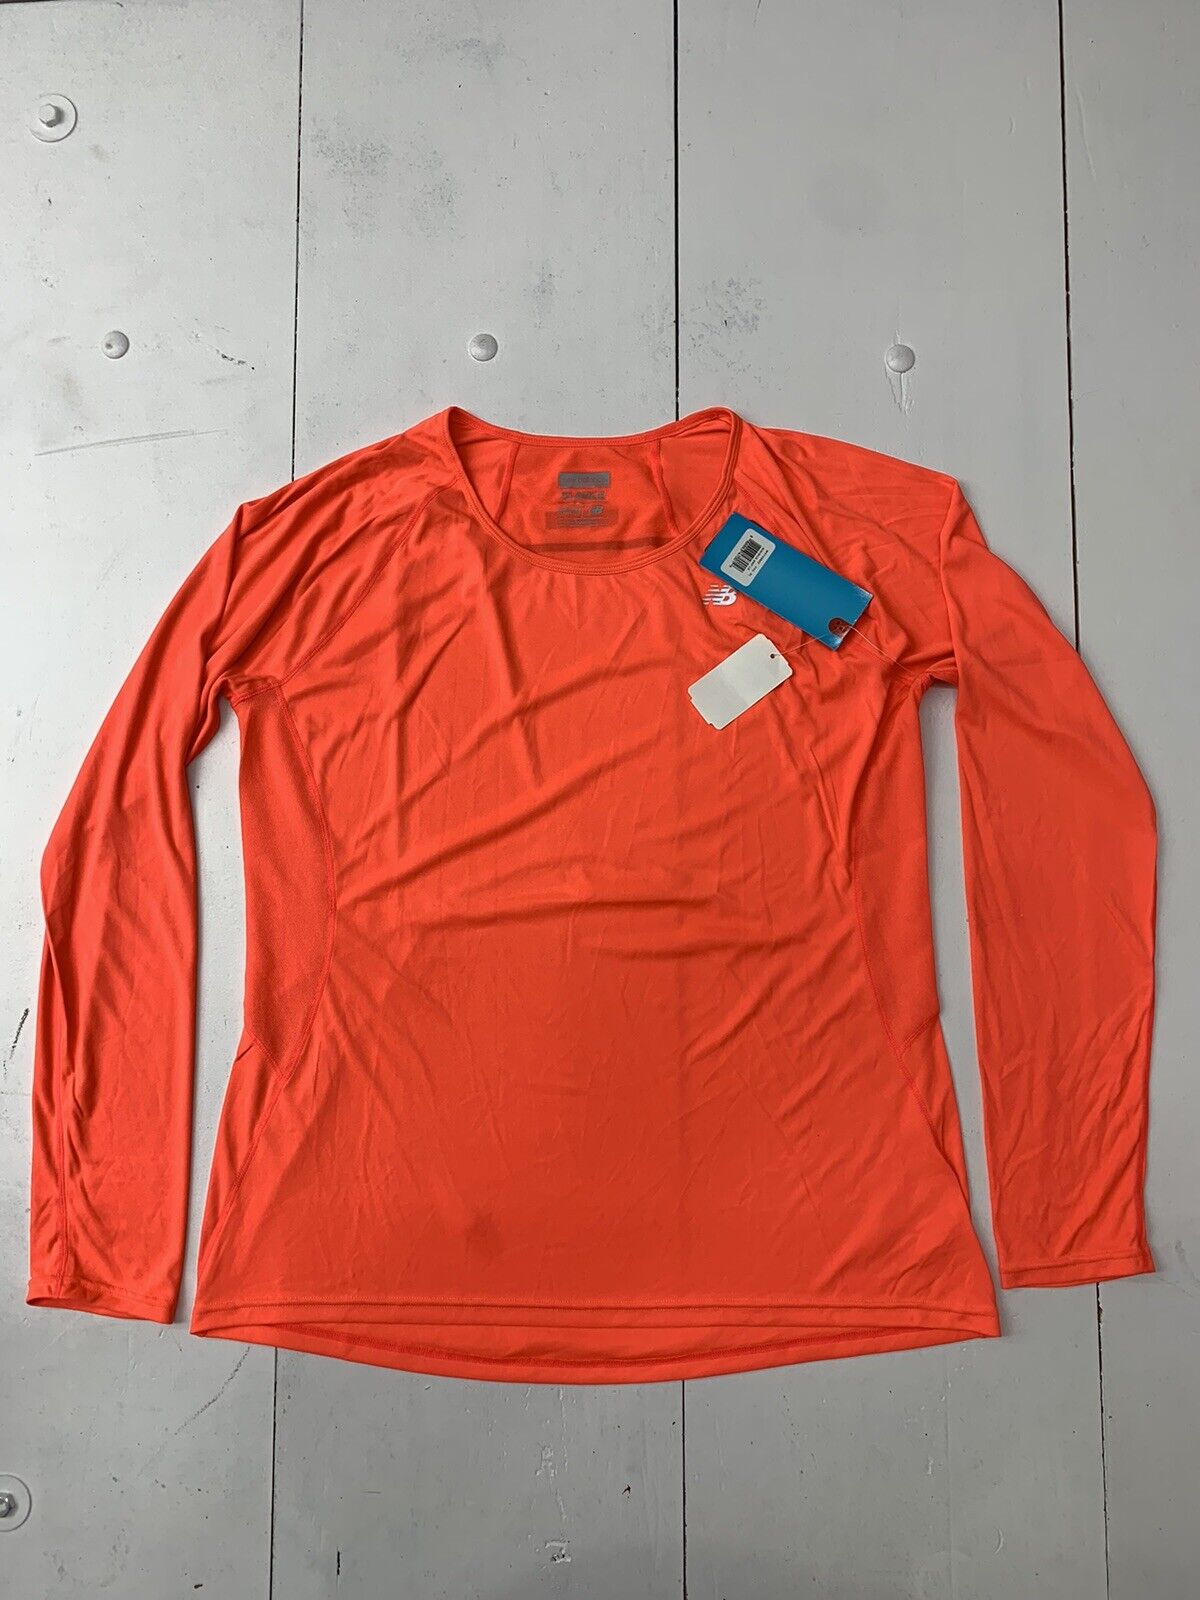 New Balance Womens Neon Orange Long Sleeve Athletic Shirt Size XL